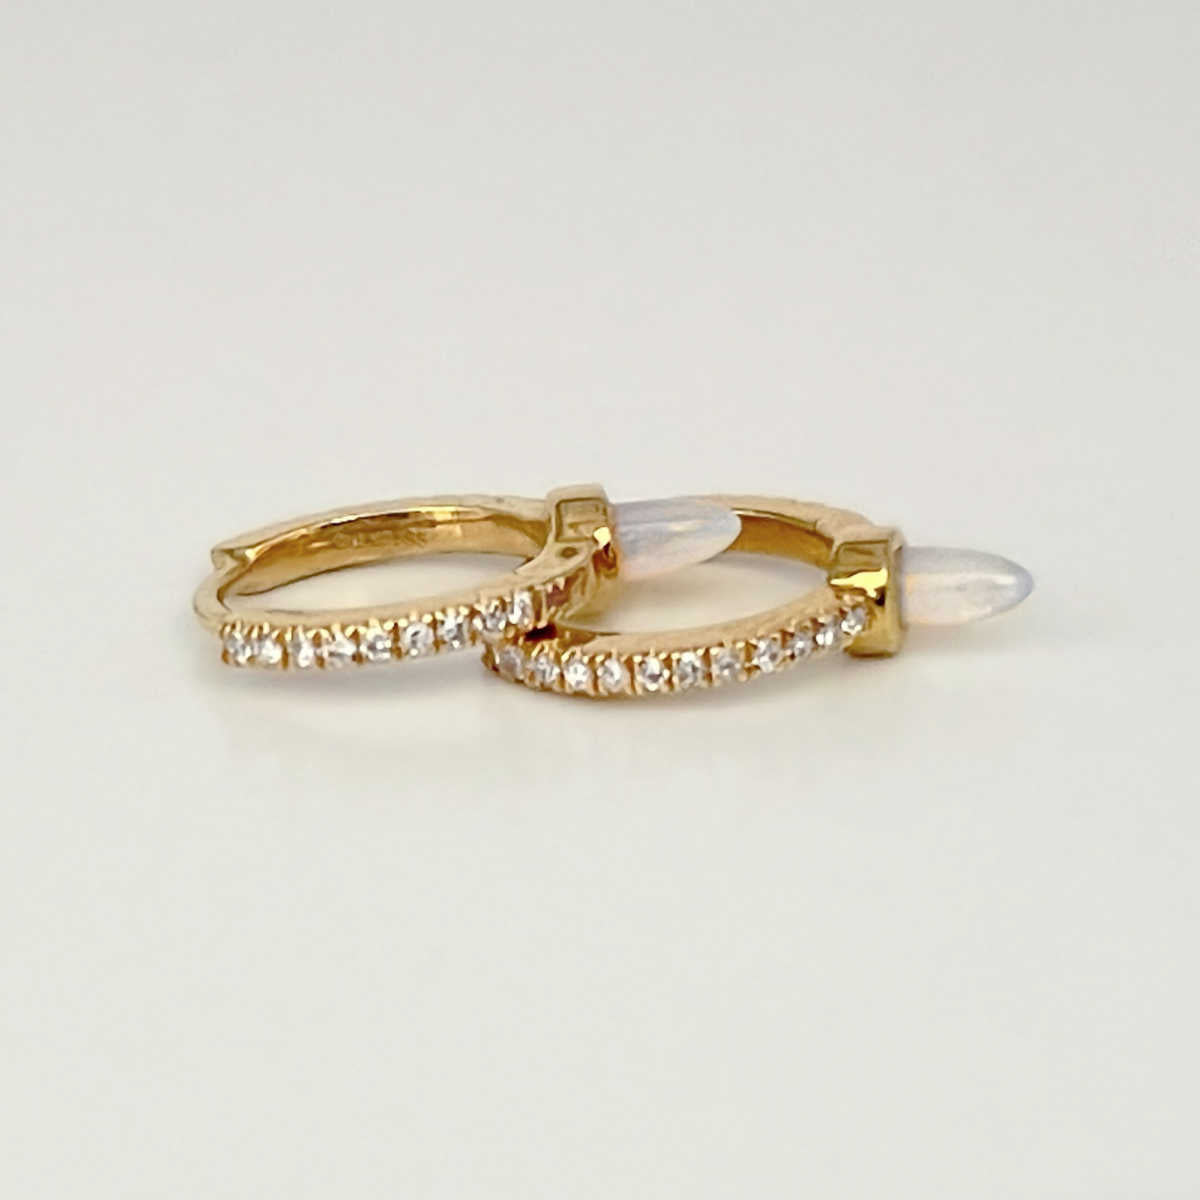 Diamond Huggie Earrings with Opal Spike | Gold Cartilage Hoop | Cartilage Piercing Helix Hoop Earrings from Two of Most